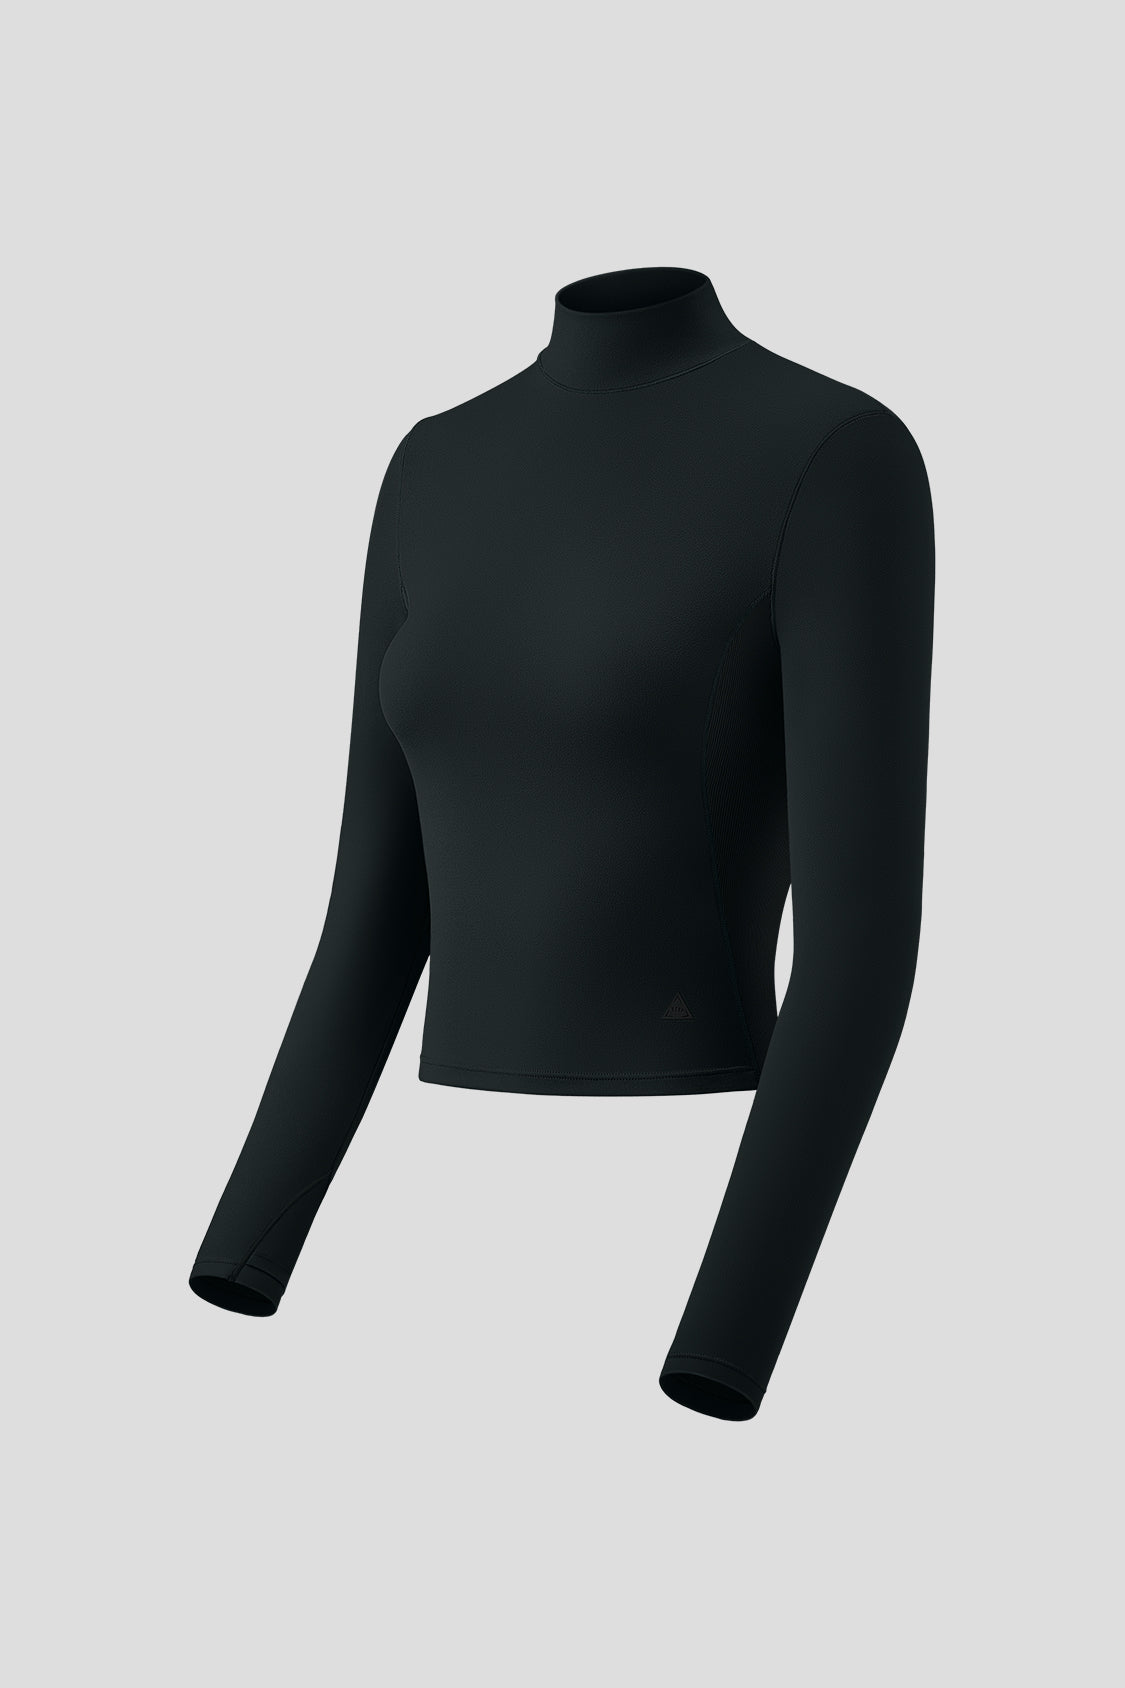 zanvin Women Long Sleeve Shirt Scoop Neck Tops Slim Fit Basic Top Thermal  Undershirts Base Layer Tee,Black,XL 